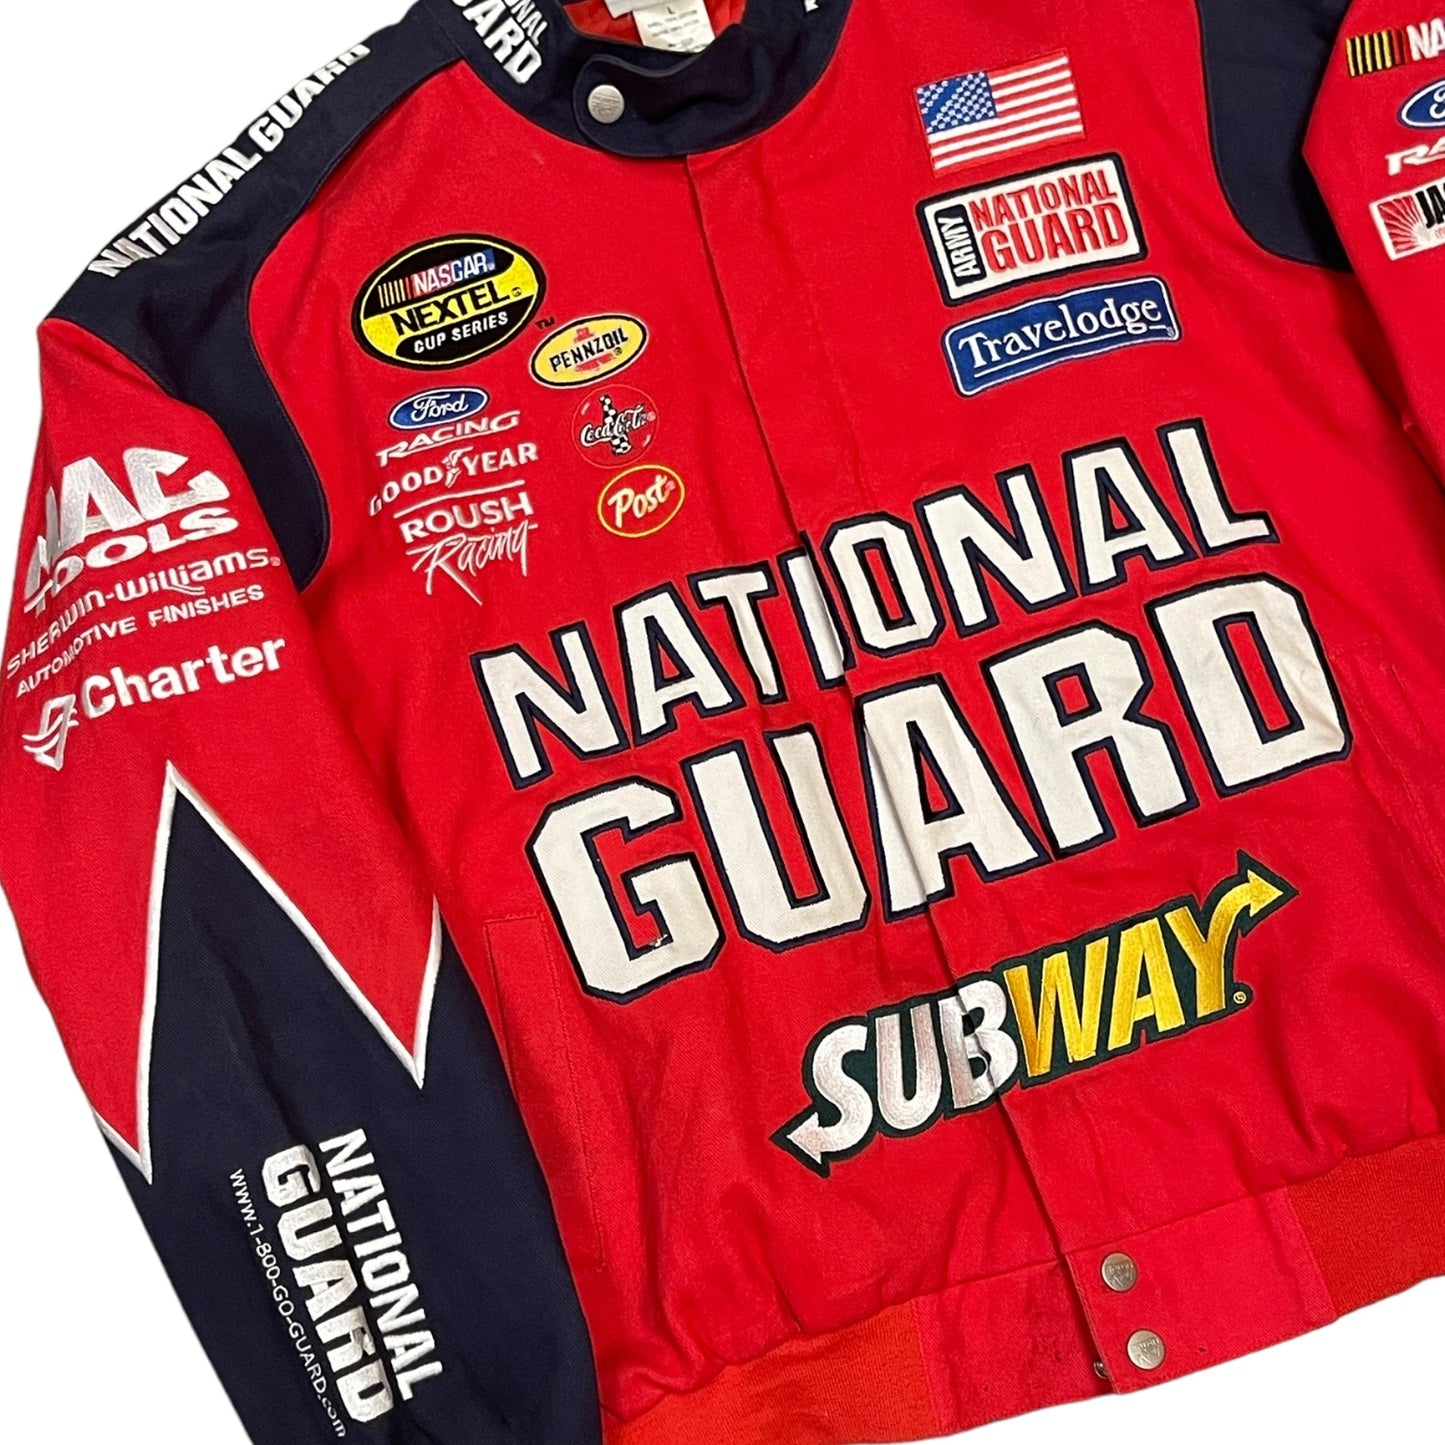 Roush Racing National Guard Subway Nascar Jacket